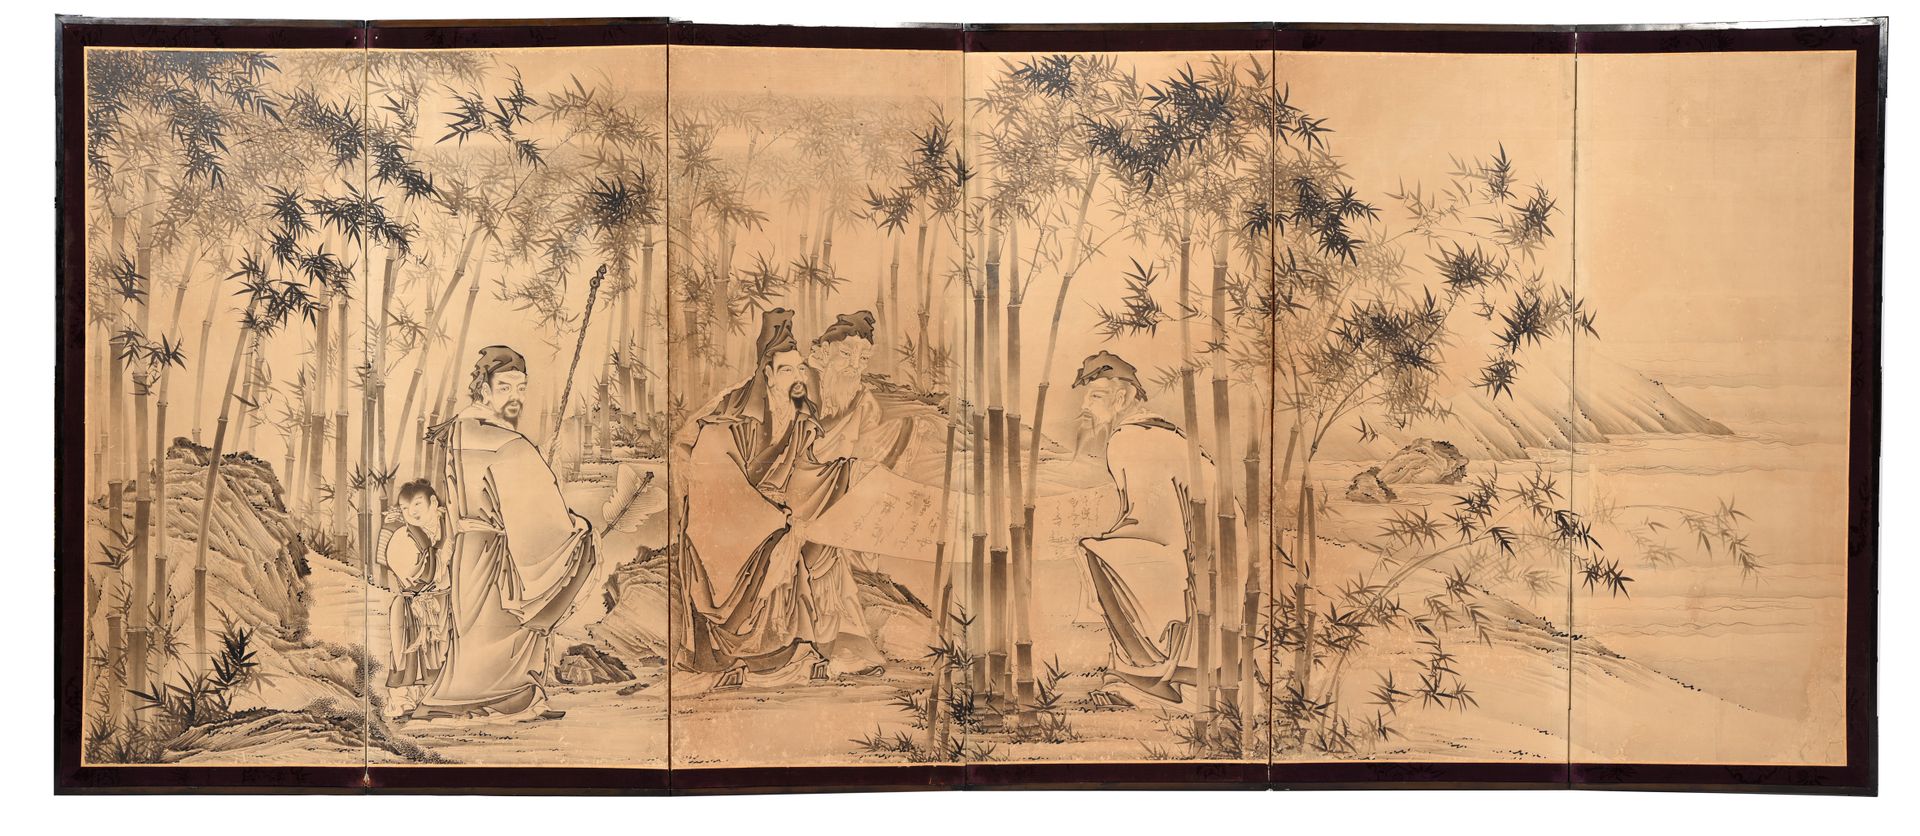 Null 六扇门折叠式屏幕
纸上水墨，表现竹林中的圣人。
日本，明治时期(1868-1912)
170 x 396 cm